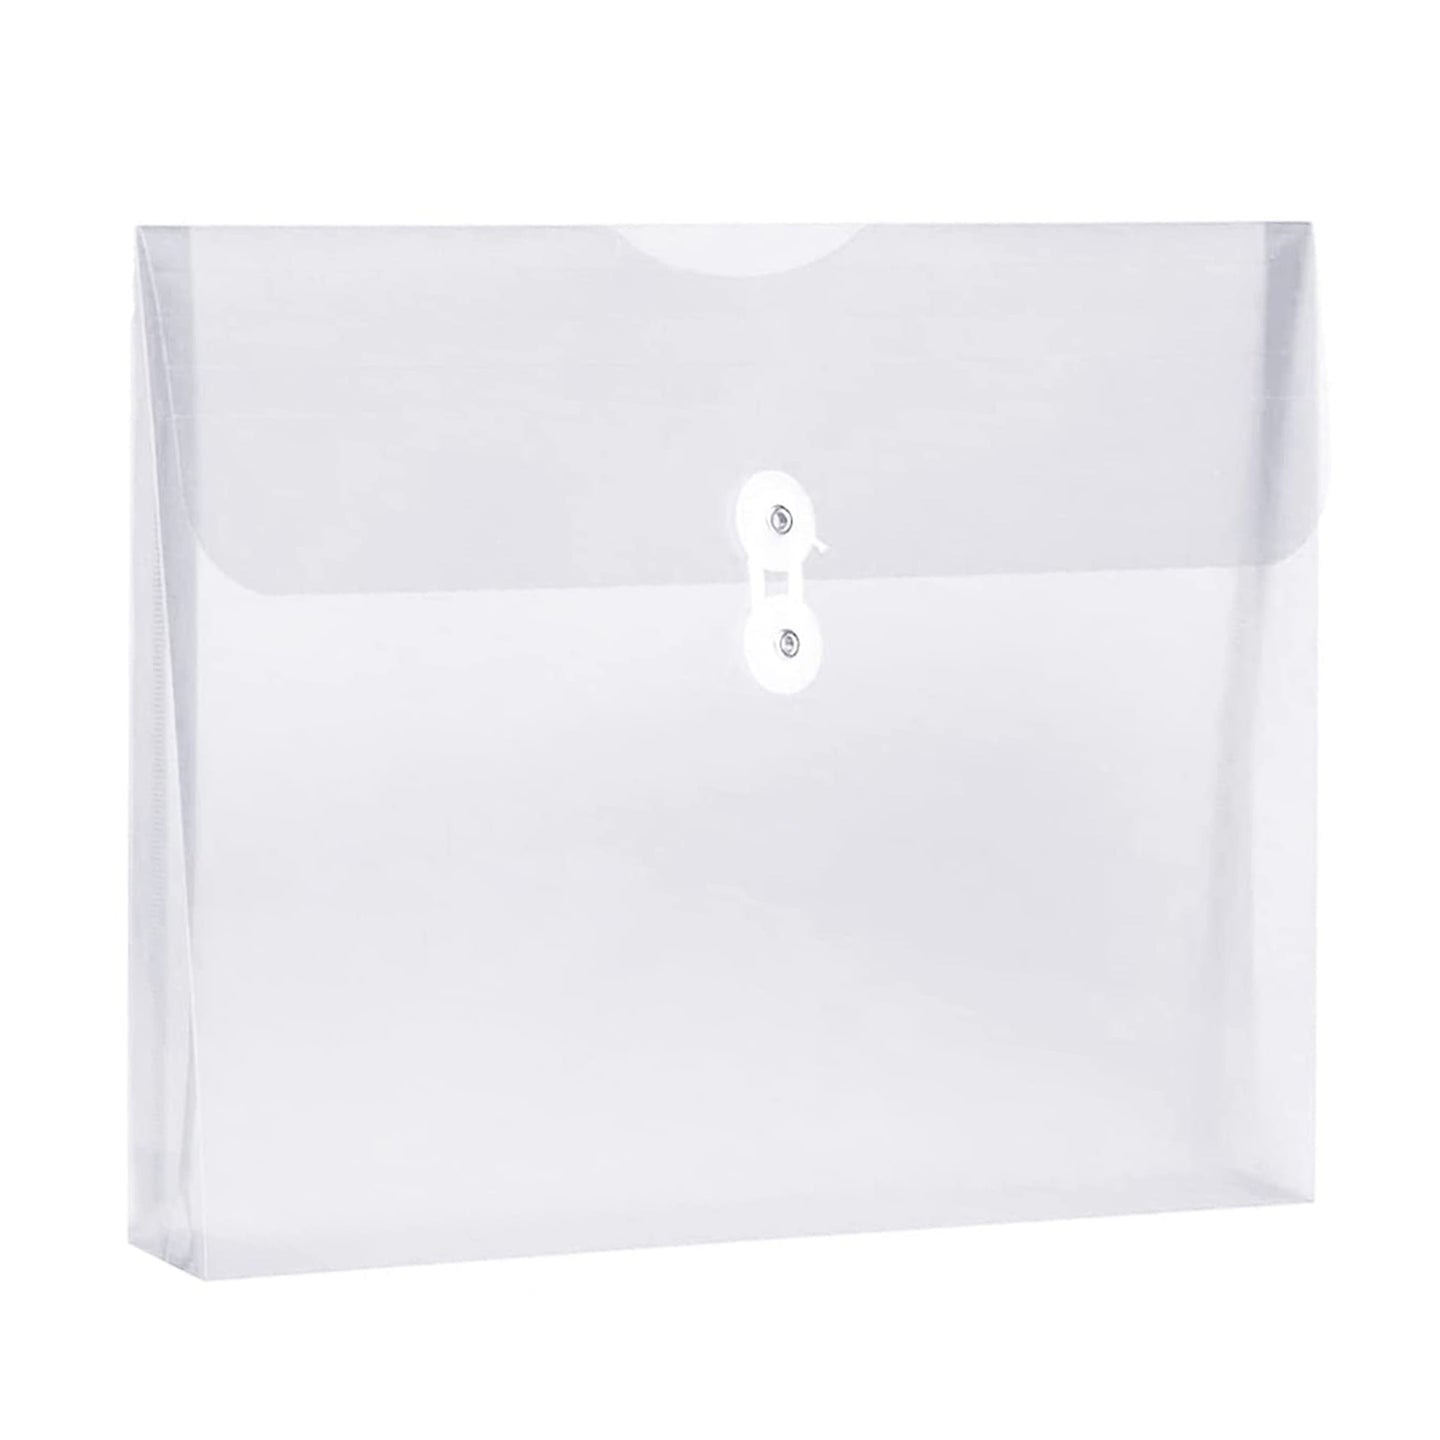 YoeeJob Legal Size Plastic Envelopes with String Closure Side Loading,White